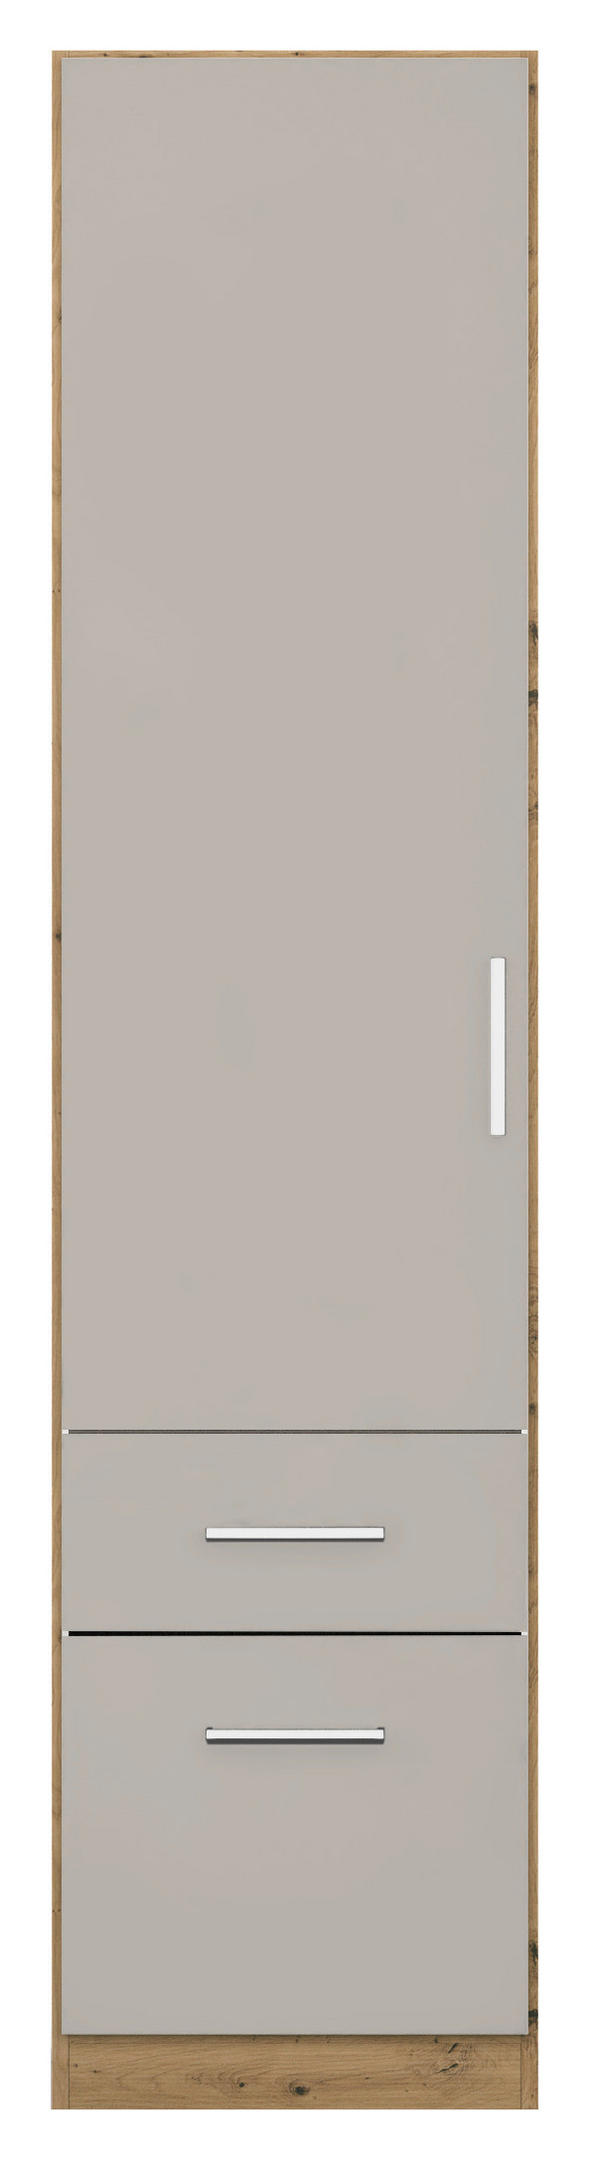 DREHTÜRENSCHRANK 47/210/54 cm 1-türig  - Chromfarben/Hellgrau, MODERN, Kunststoff (47/210/54cm) - Rauch Möbel